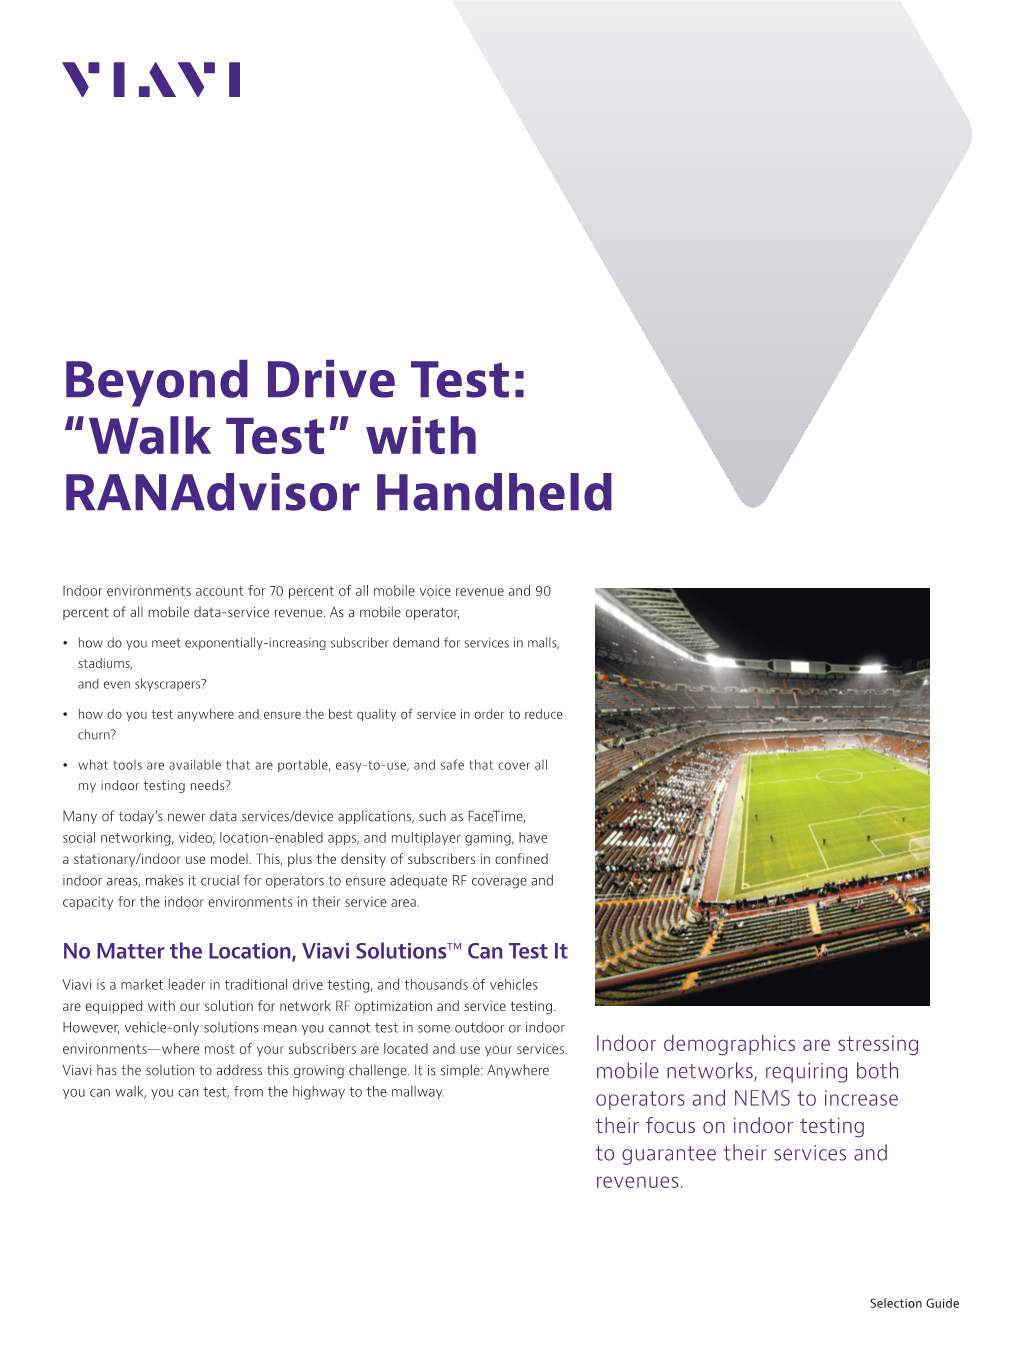 Beyond Drive Test: “Walk Test” with Ranadvisor Handheld